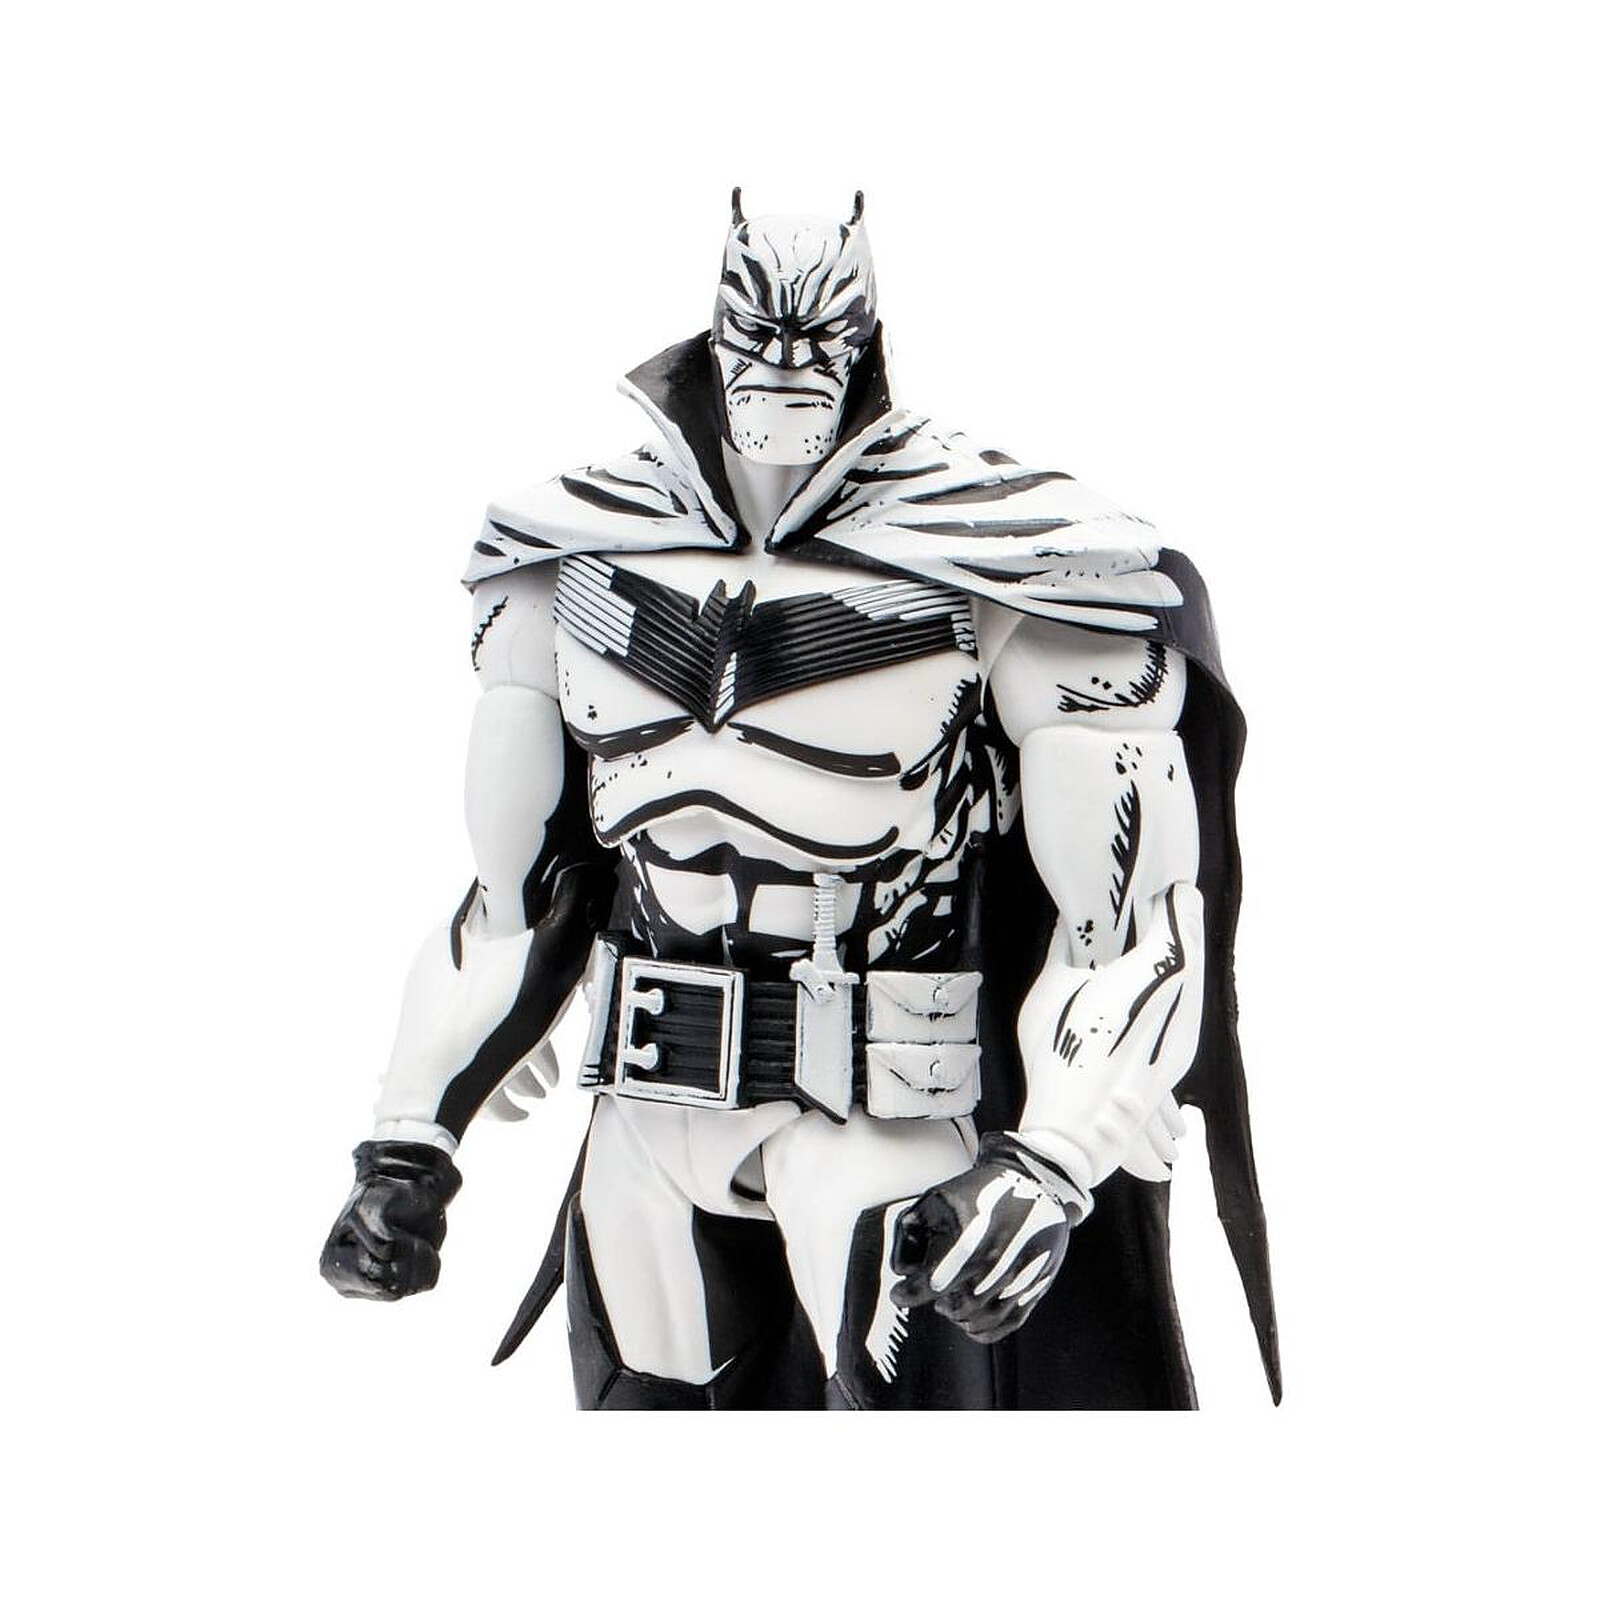 Batman - Statuette Batman (Michael Keaton) 30 cm - Figurines - LDLC